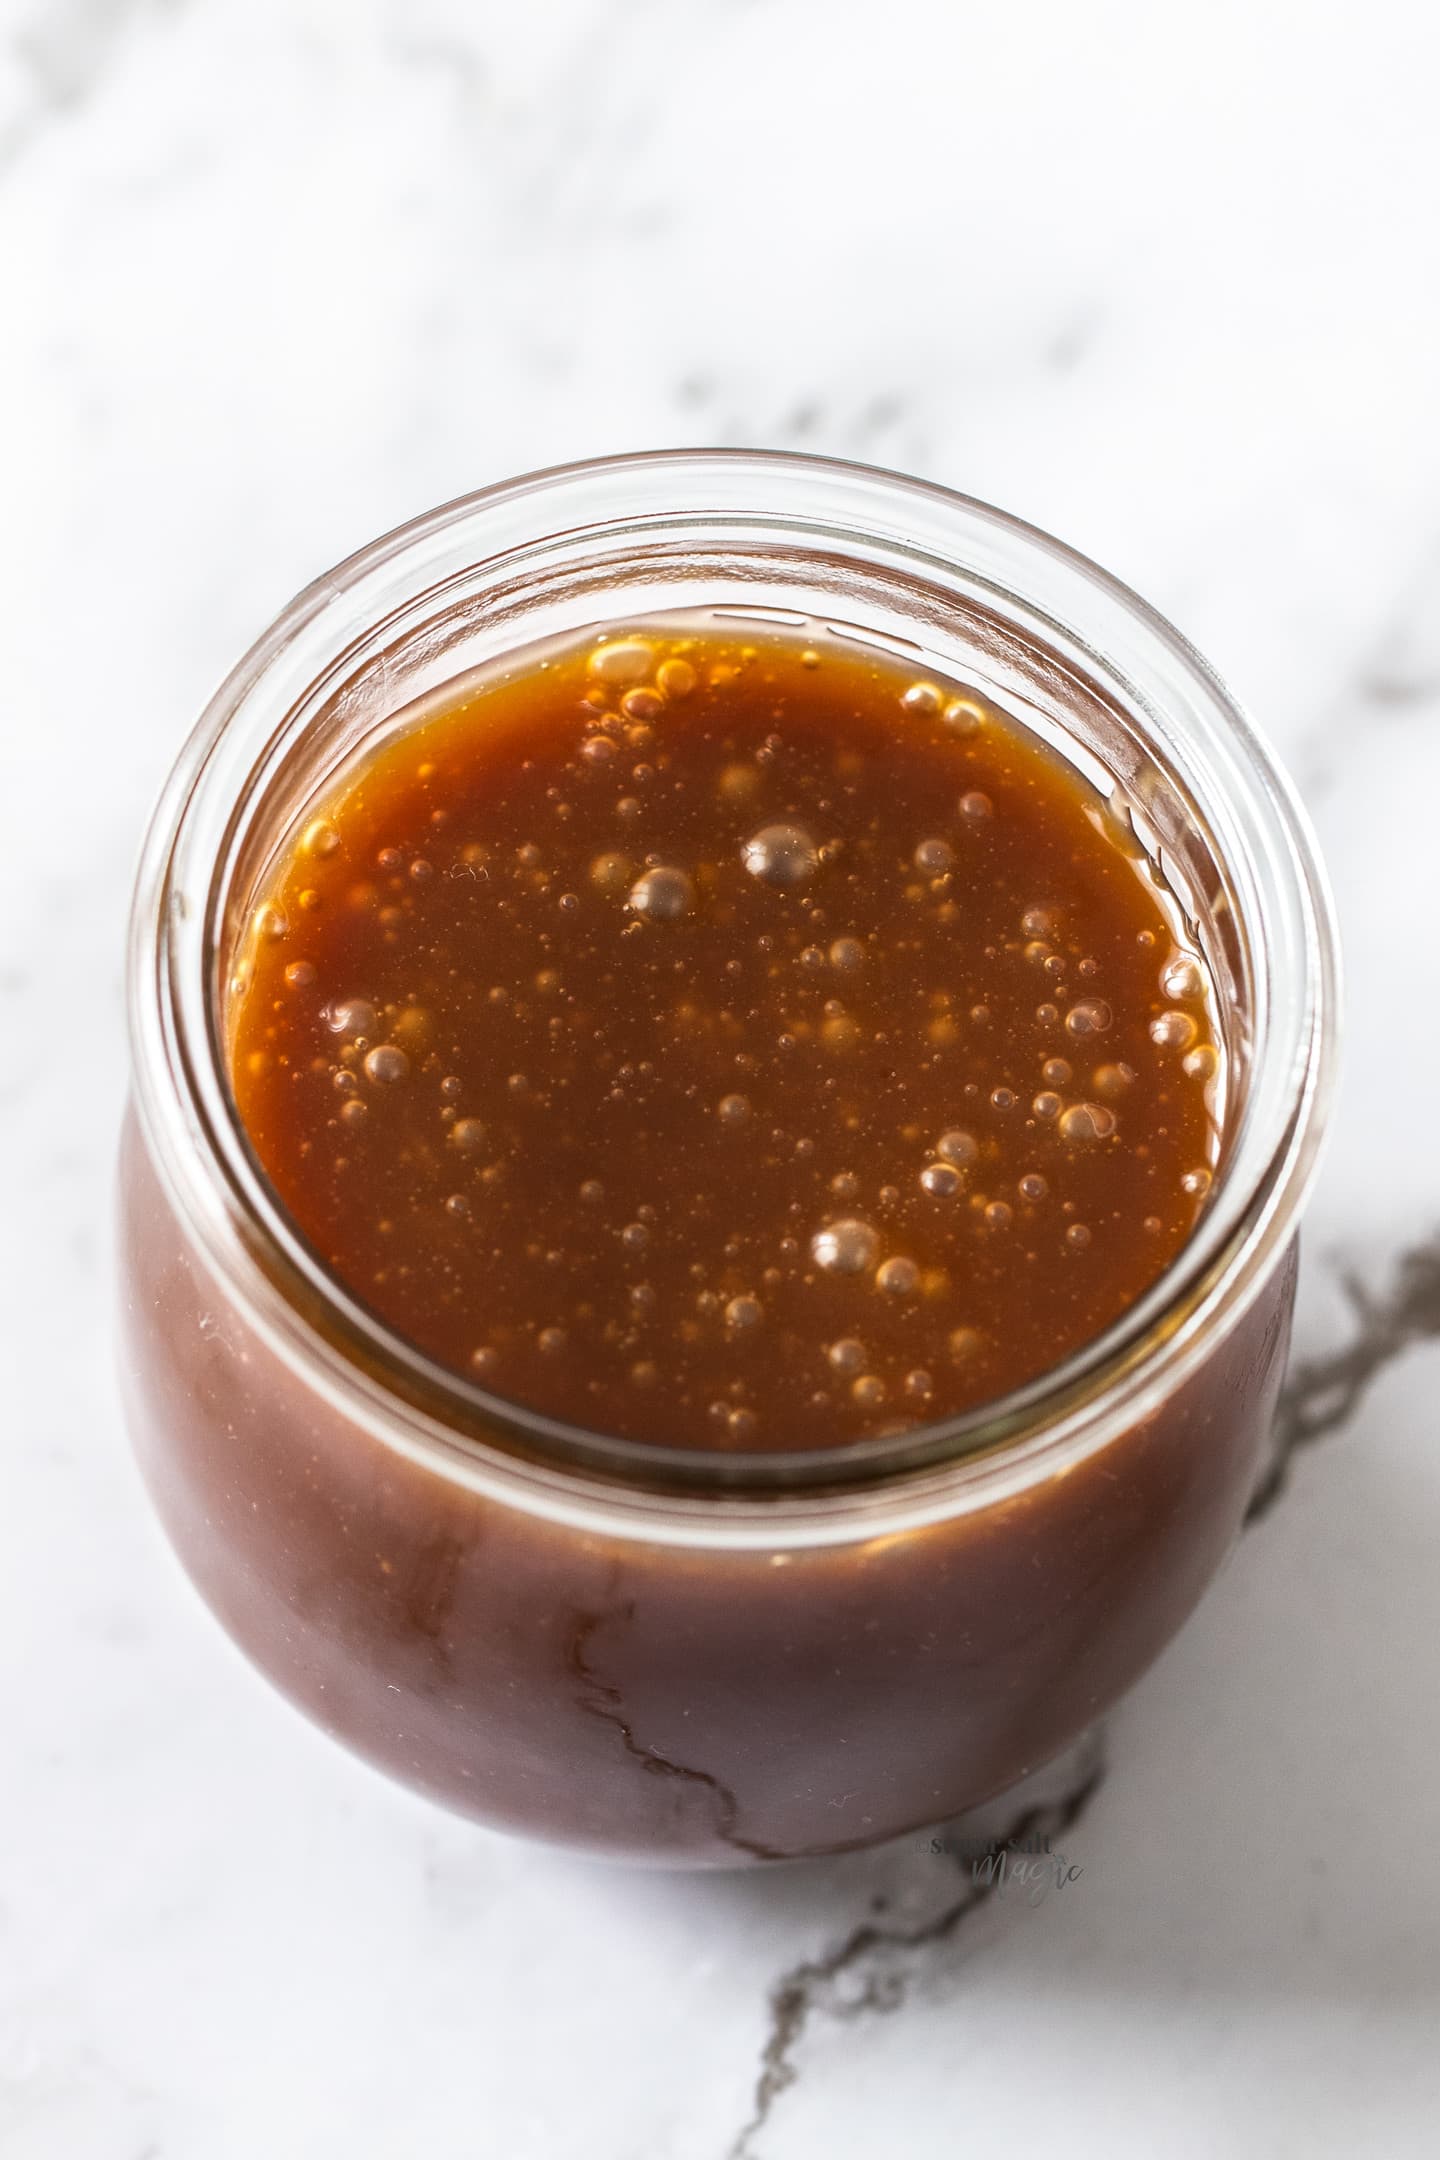 A round glass jar filled with caramel sauce.